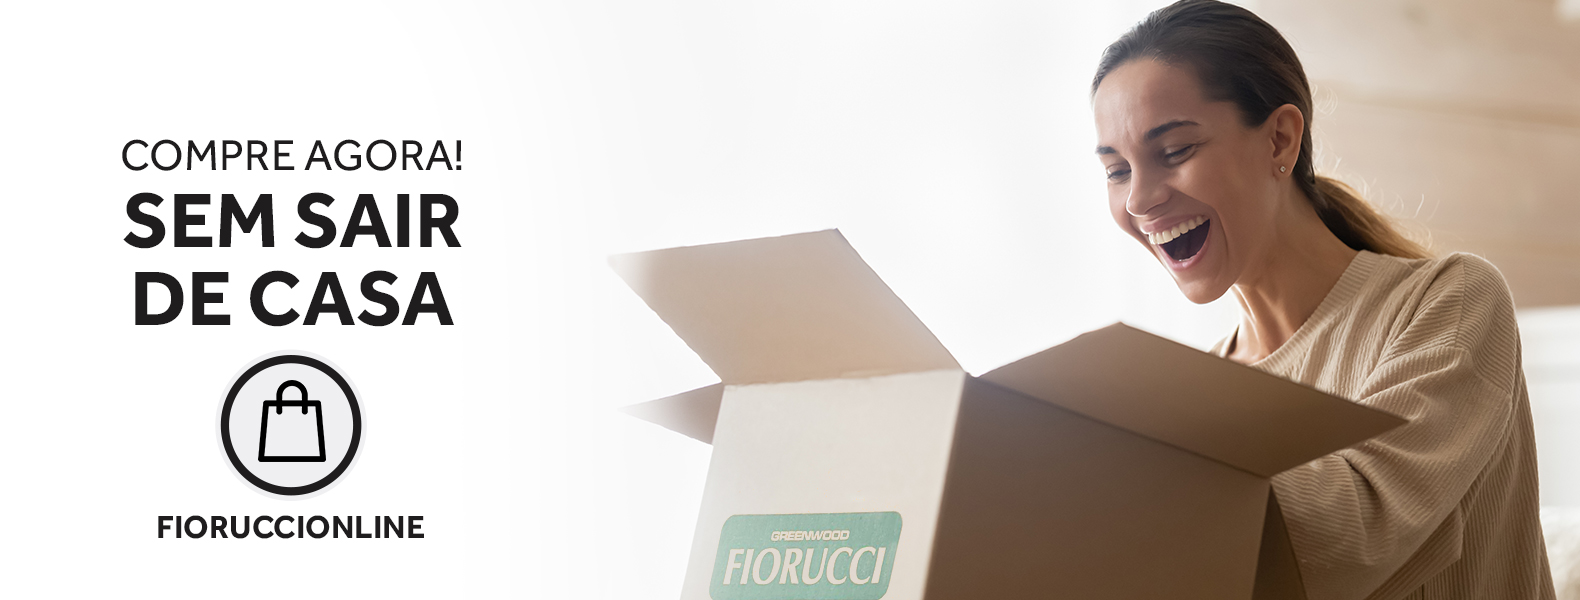 Fiorucci - Os Melhores Perfumes Online